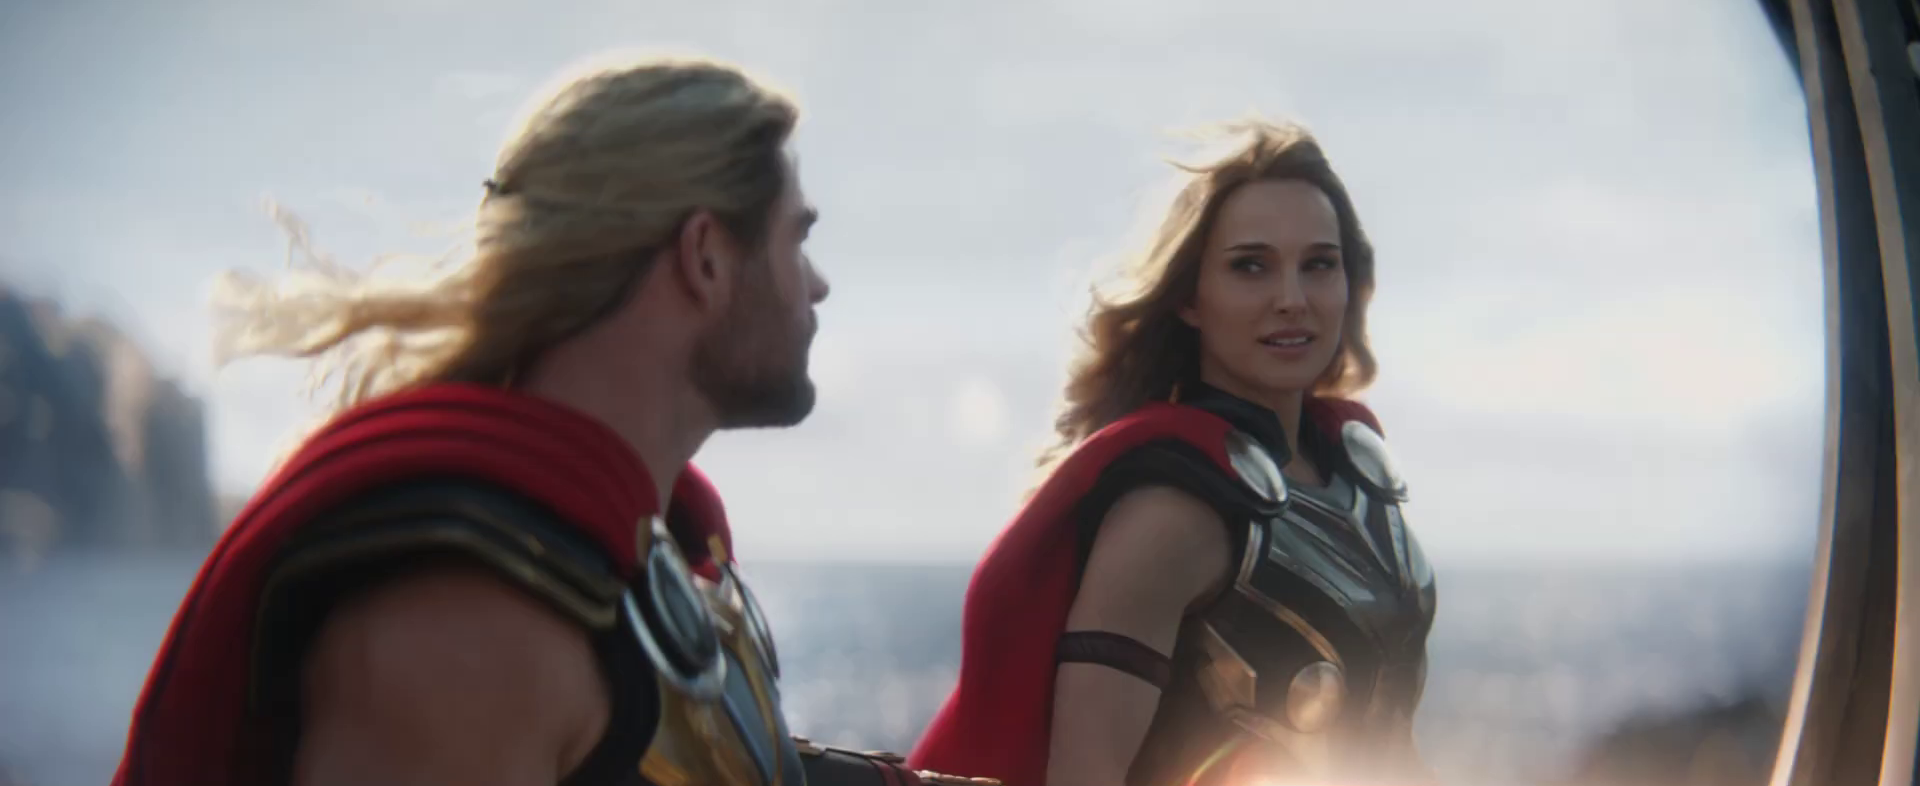 Thor: Love And Thunder Wikipedia